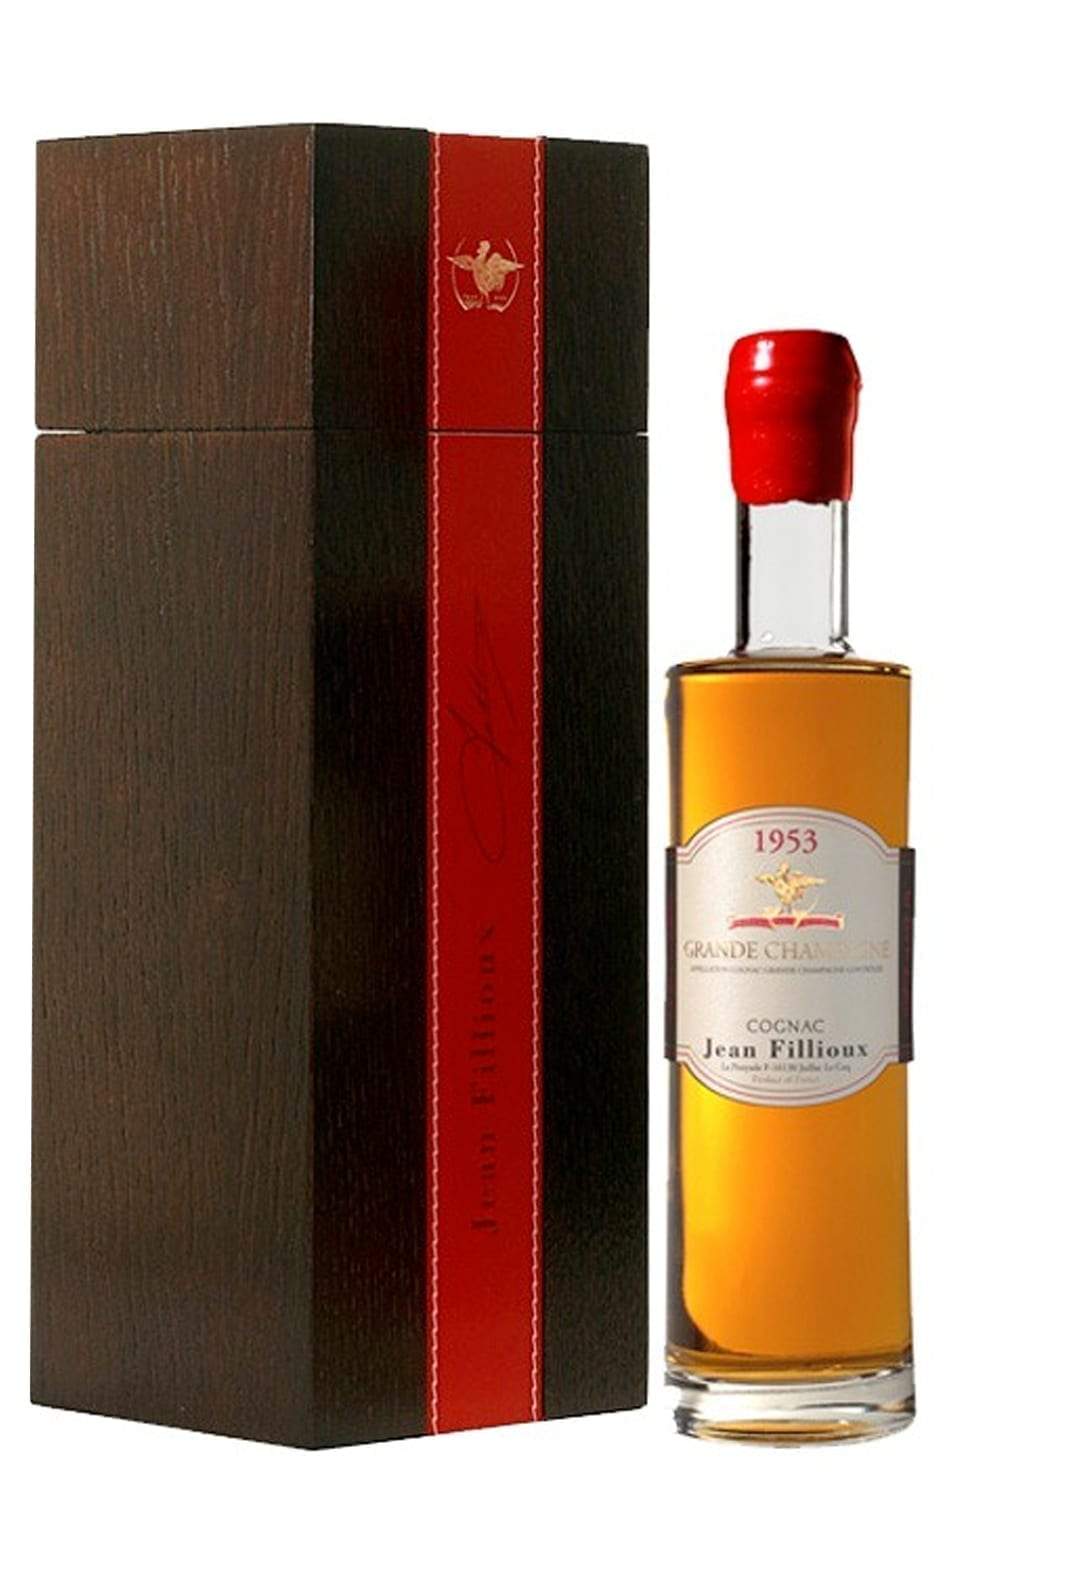 Jean Fillioux 1953 Cognac 42% 350ml | Brandy | Shop online at Spirits of France